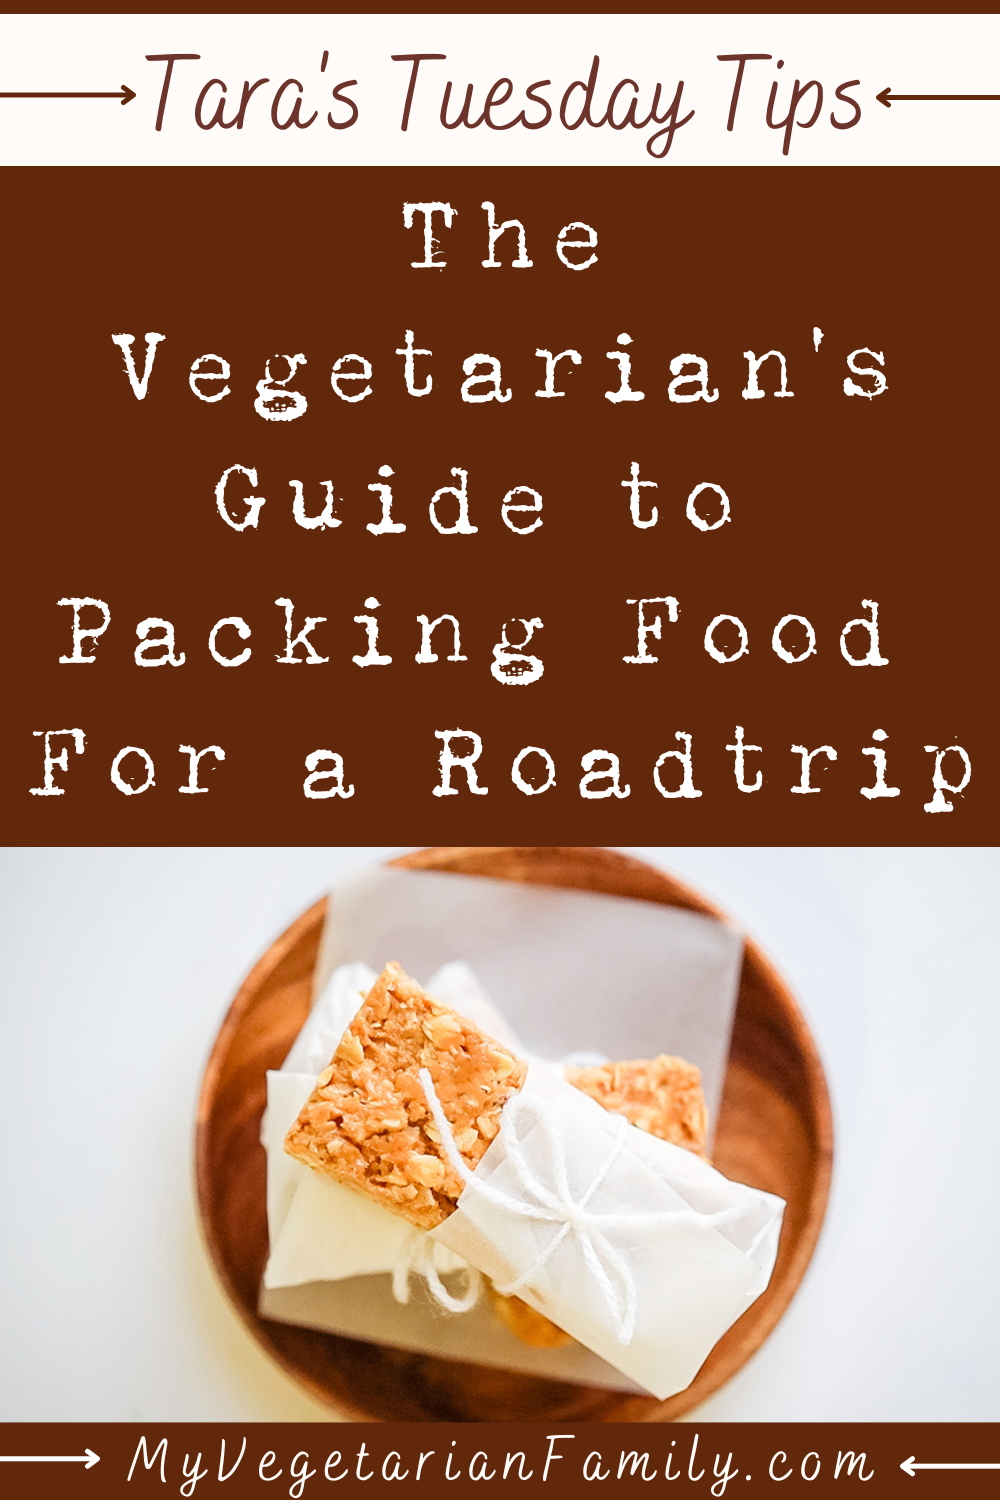 The Vegetarian's Guide to Packing Foood For a Raodtrip | My Vegetarian Family | Tara's Tuesday Tips #vegetarianroadtrip #tarastuesdaytips